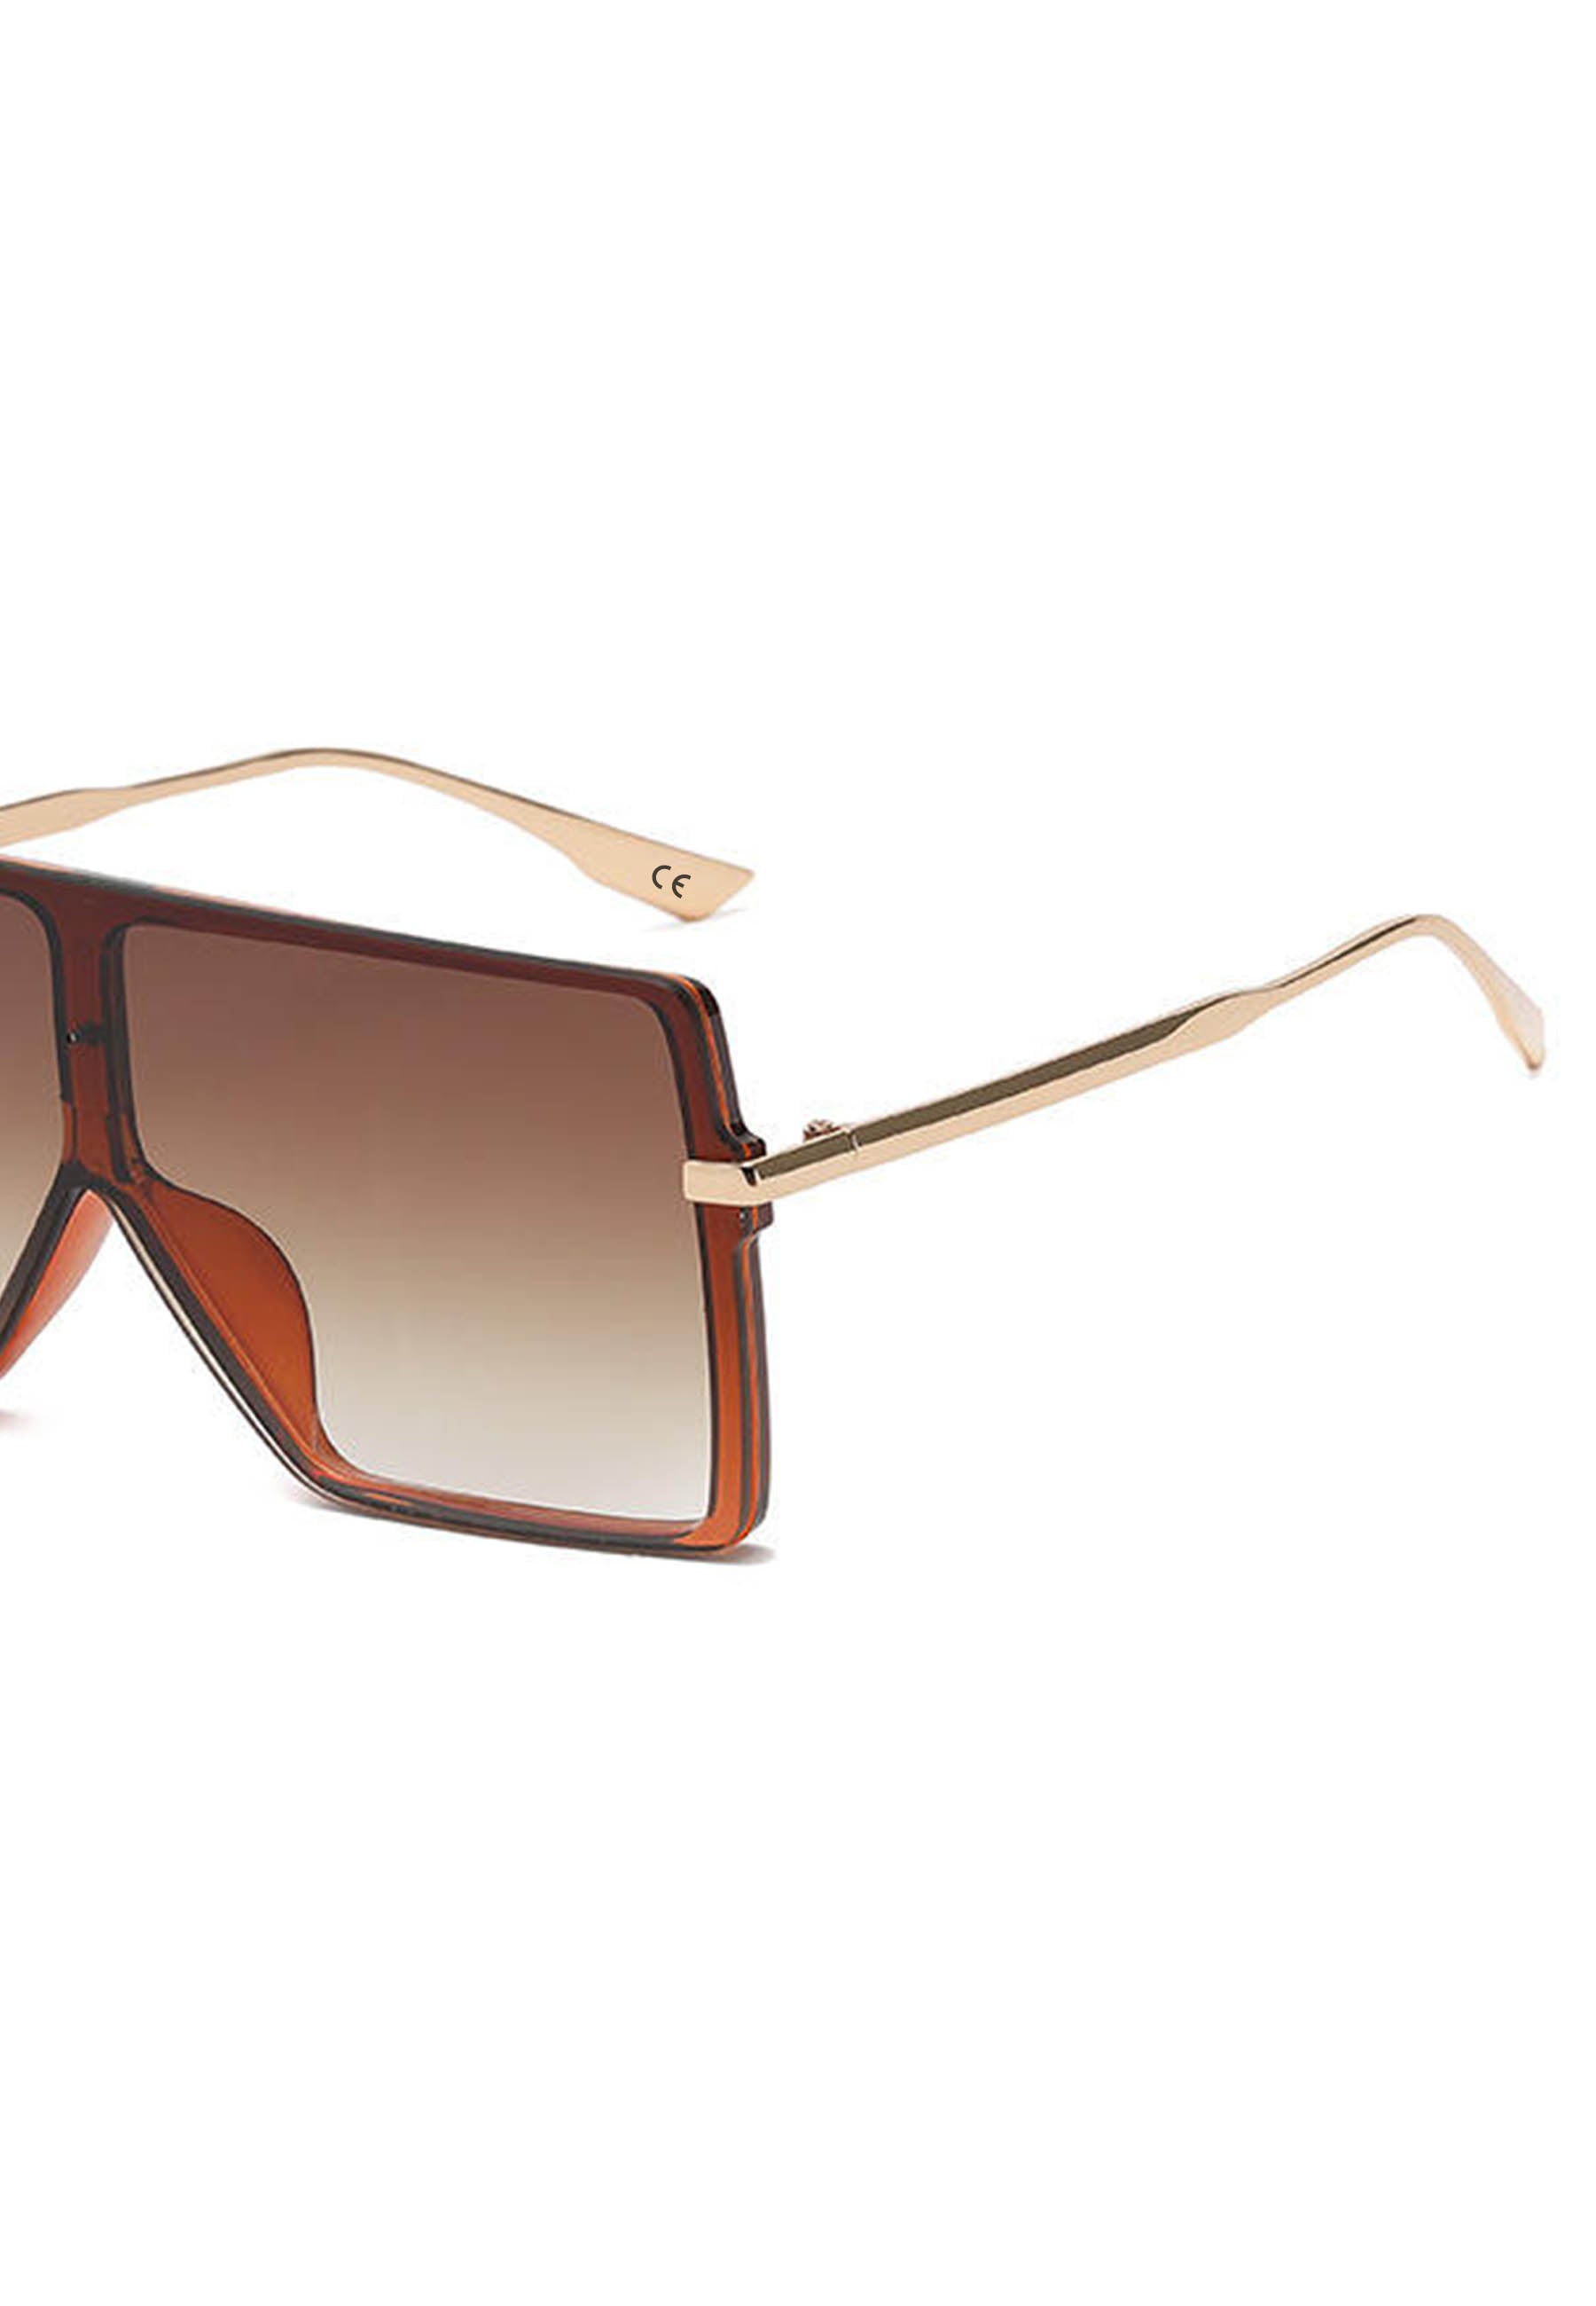 Avant-Garde Paris Square Shape Oversized Sunglasses